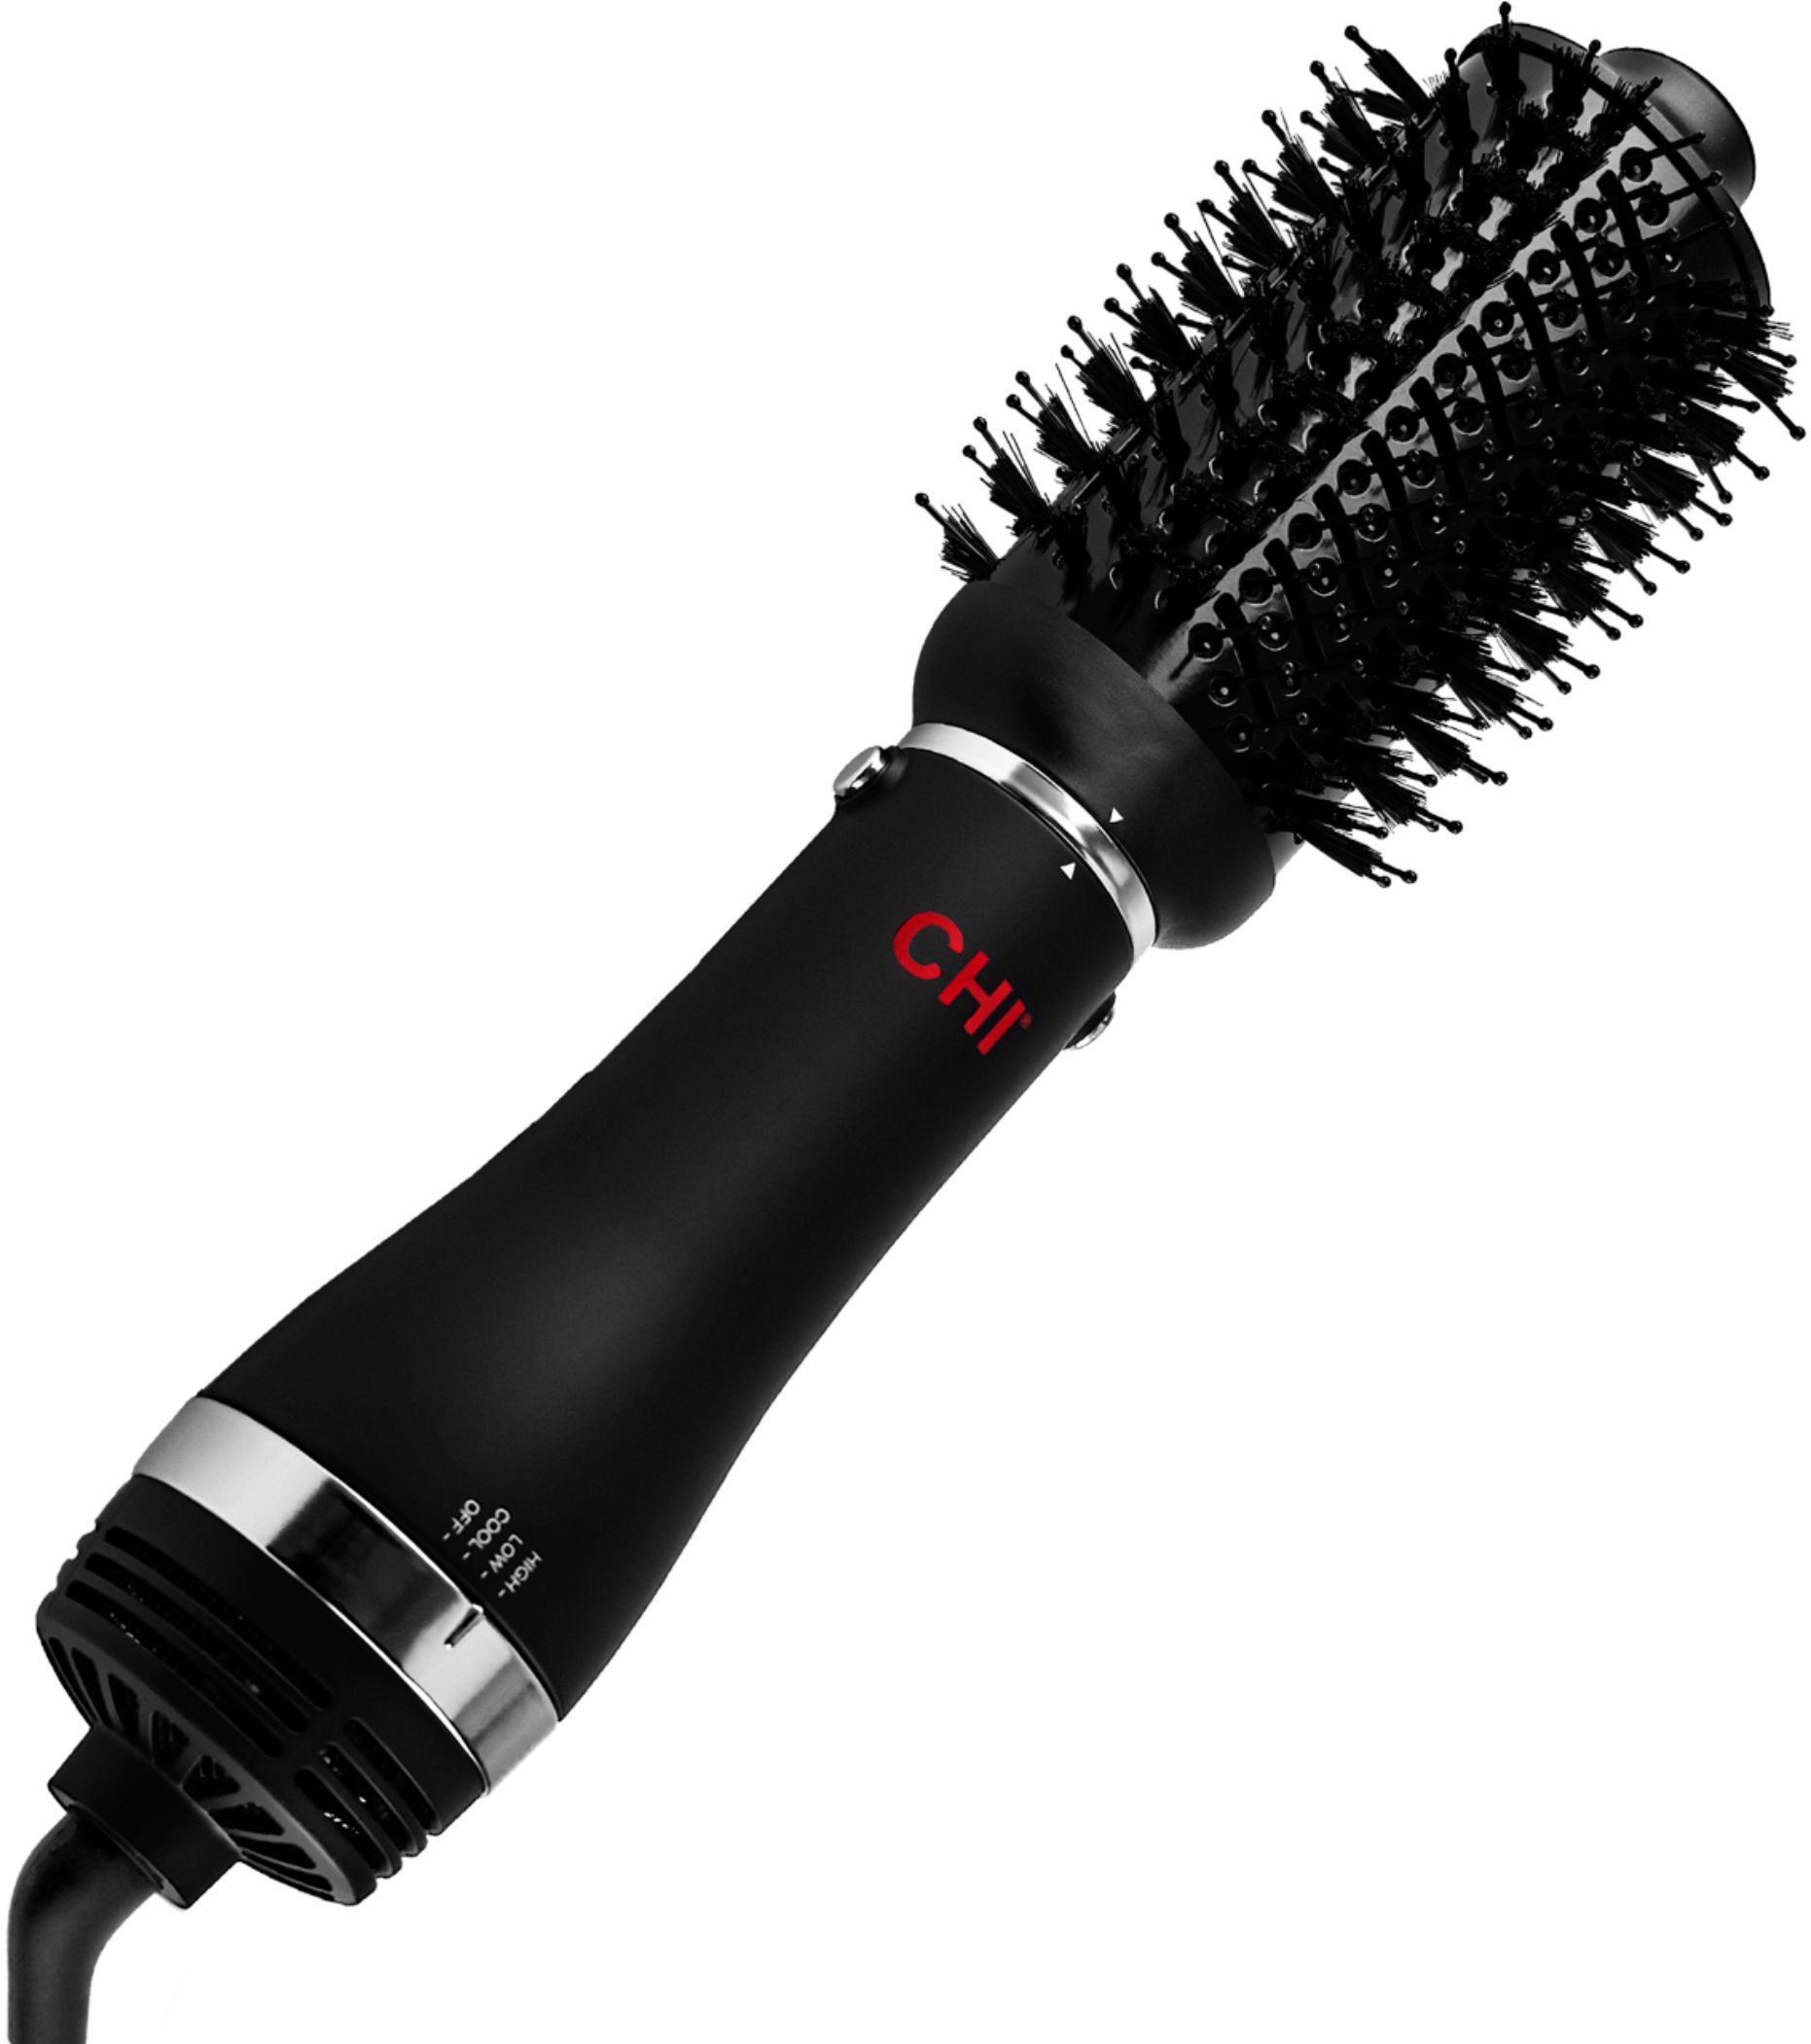 Revlon Hot Air Brush Review 2023 - Does the Revlon Hair Tool Really Work?